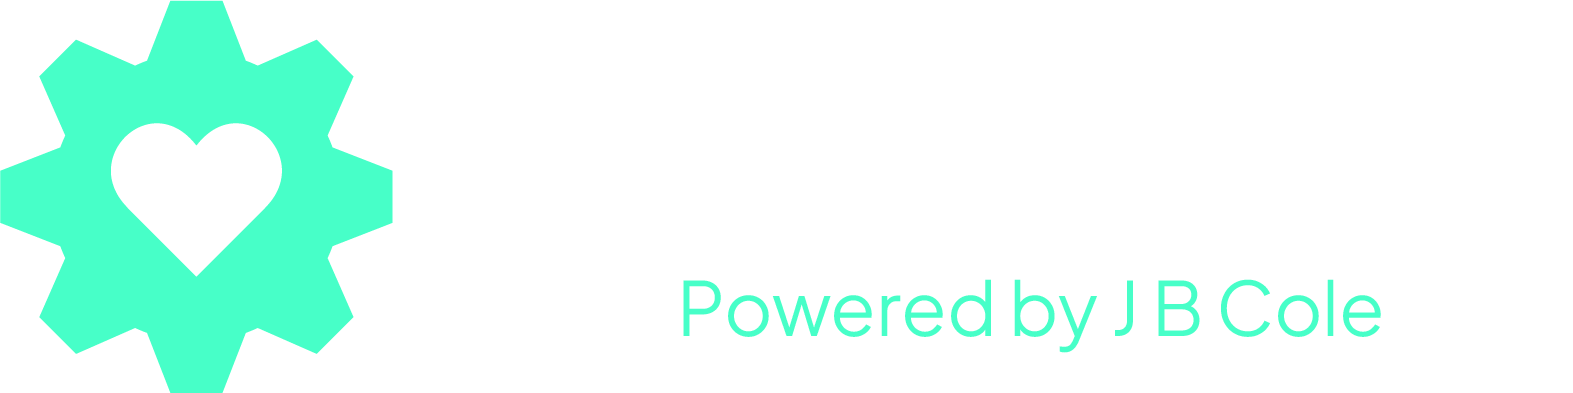 WP logo Green white@3x